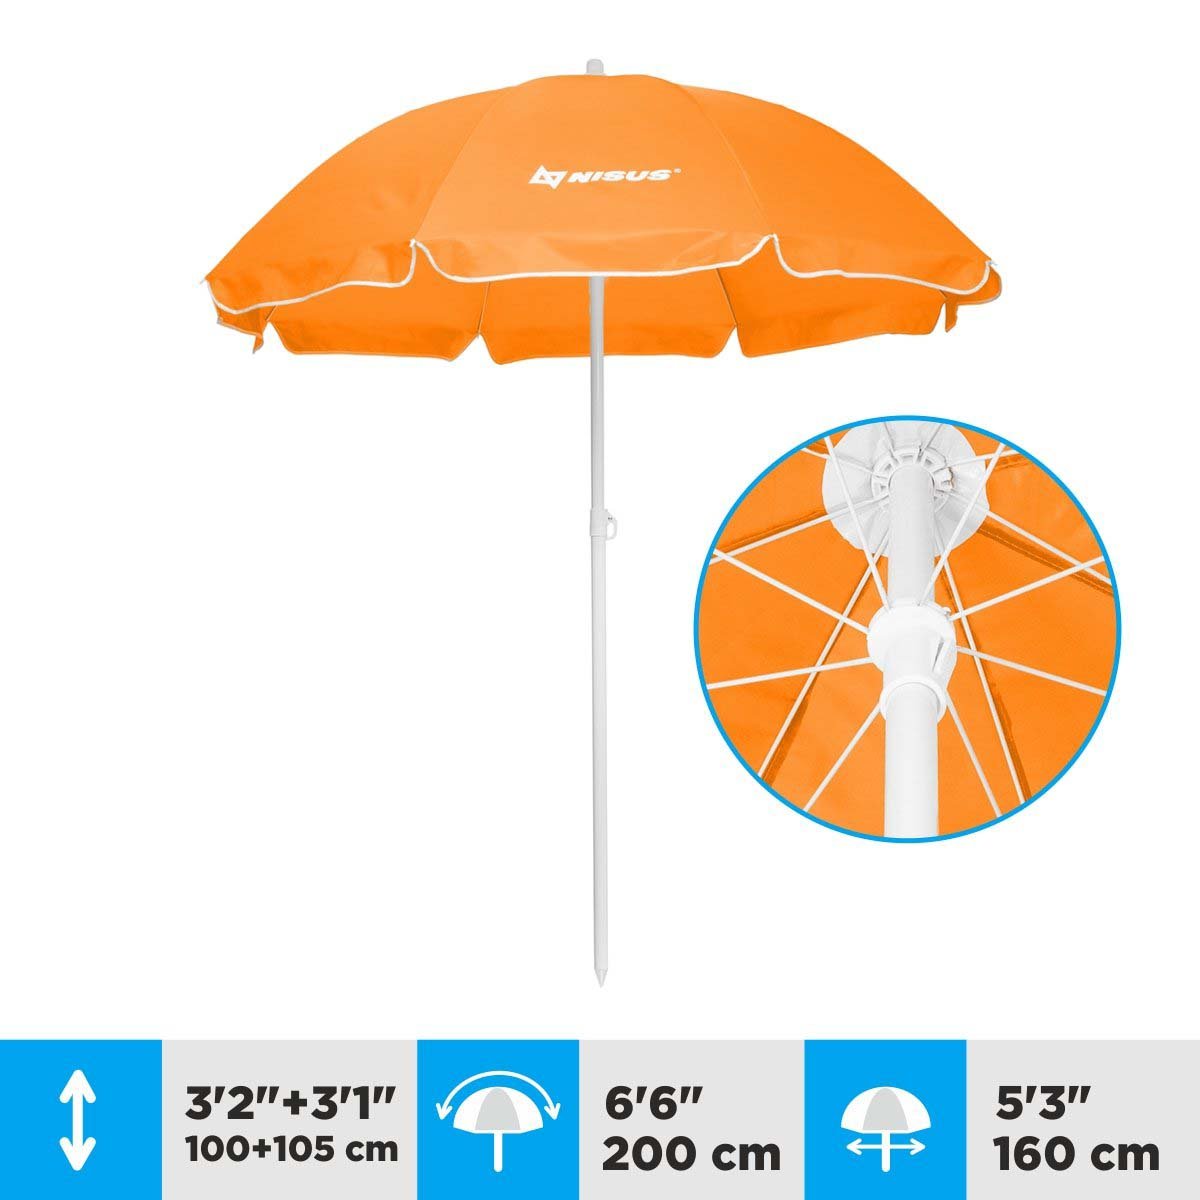 A 5.3 ft Orange Folding Beach Umbrella is 6.3 feet high